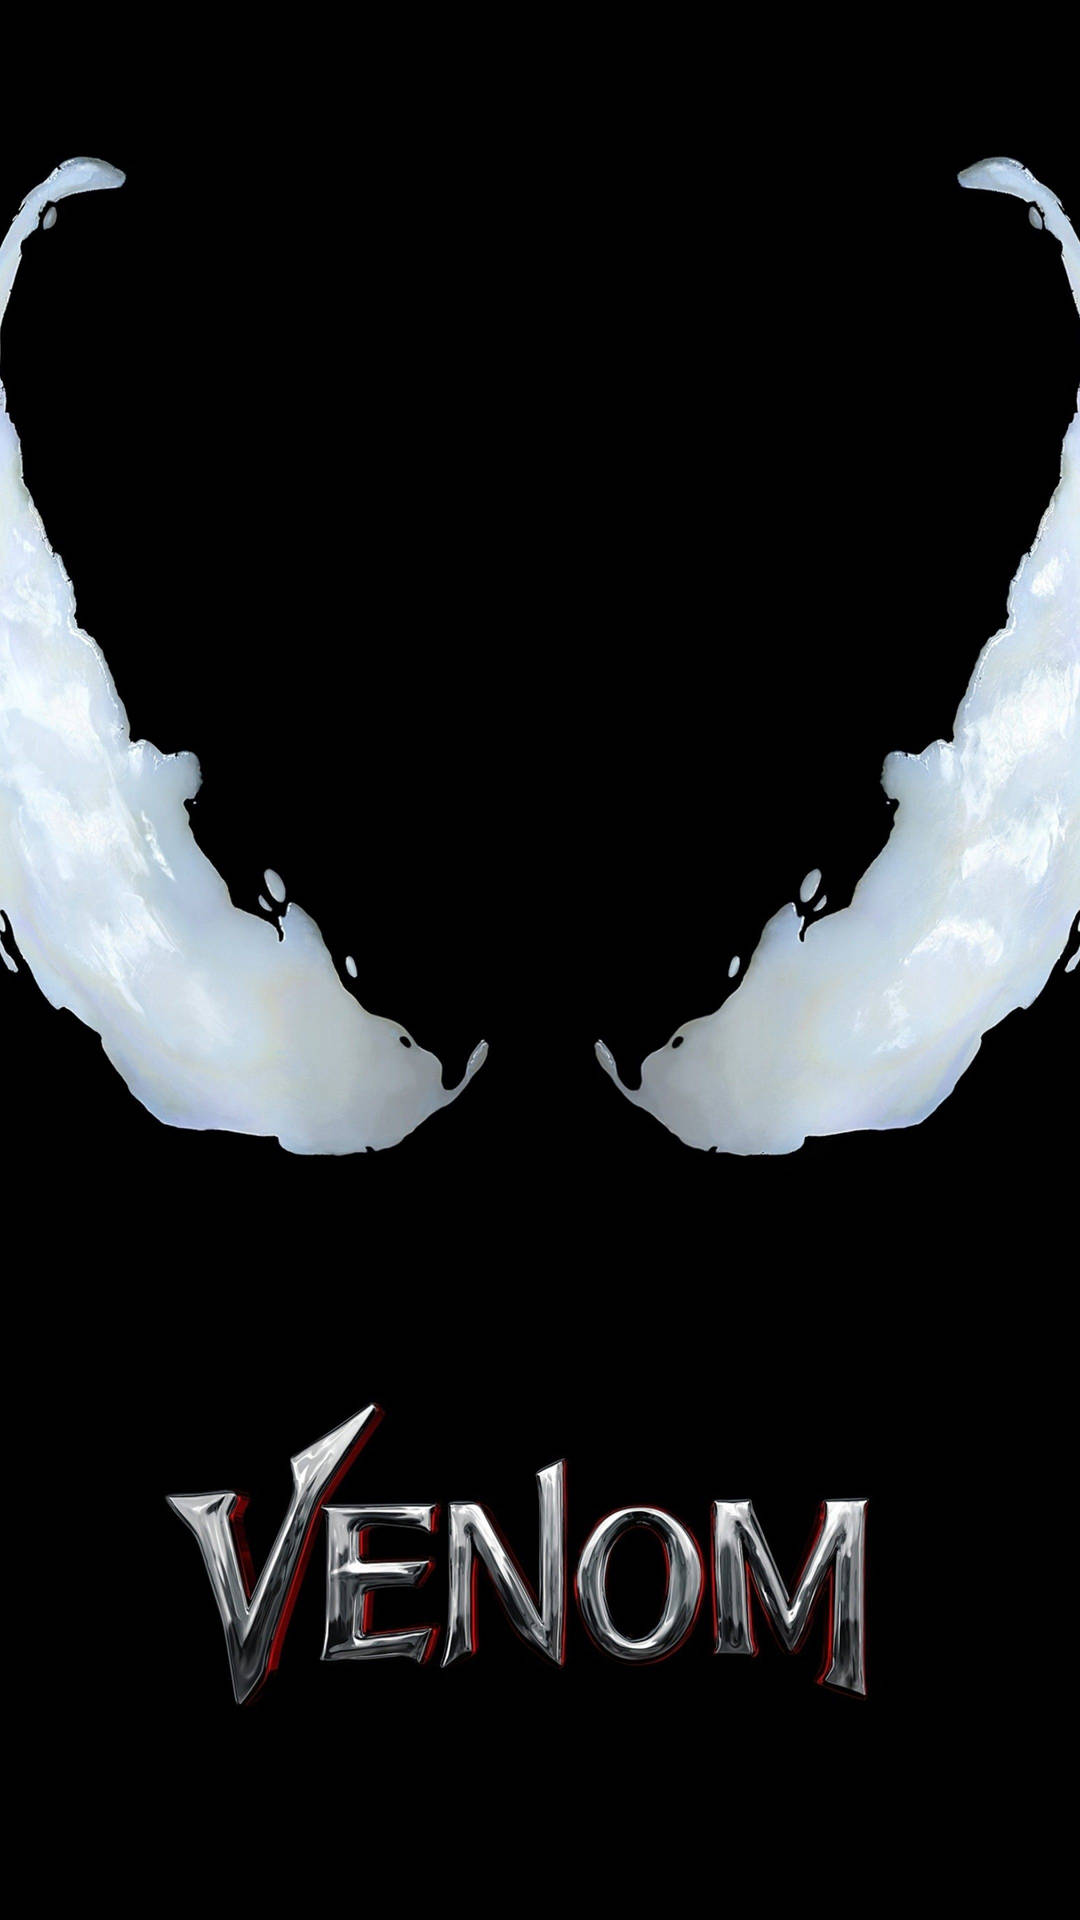 Venom Movie 2018 Poster Wallpaper